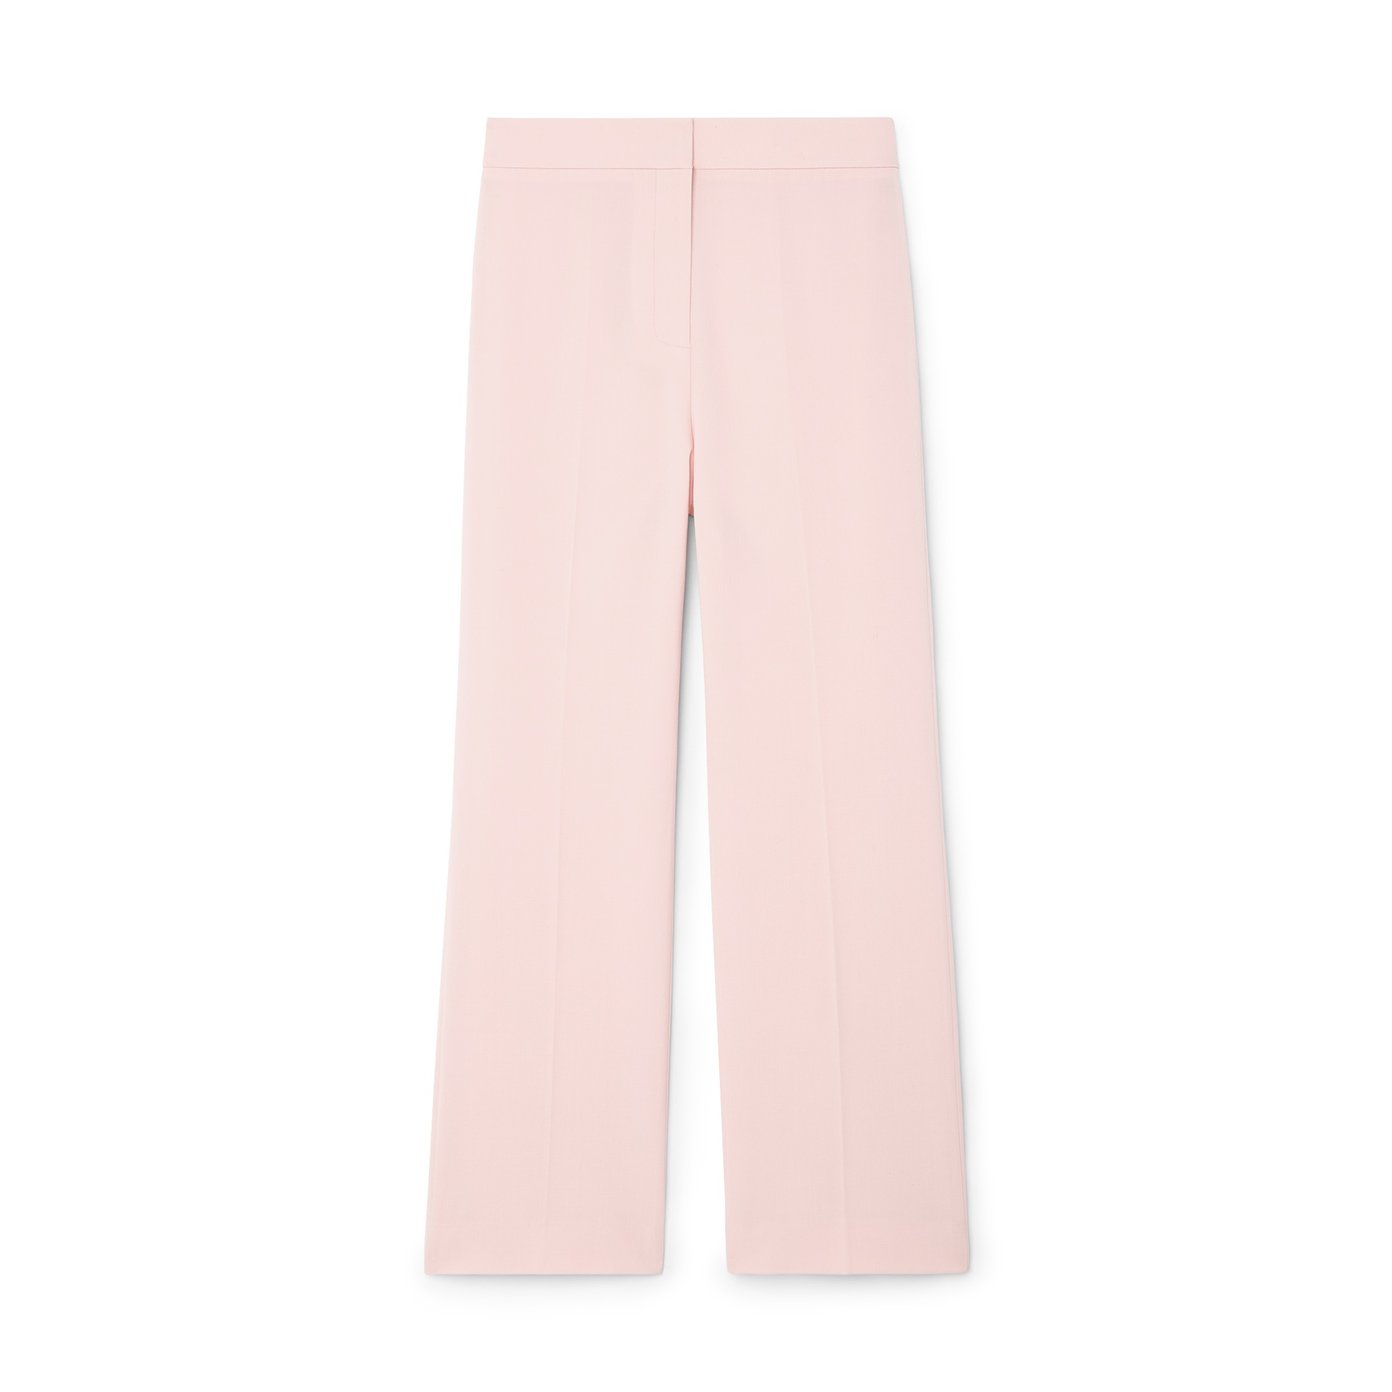 Authentic Zara pink high waist pants